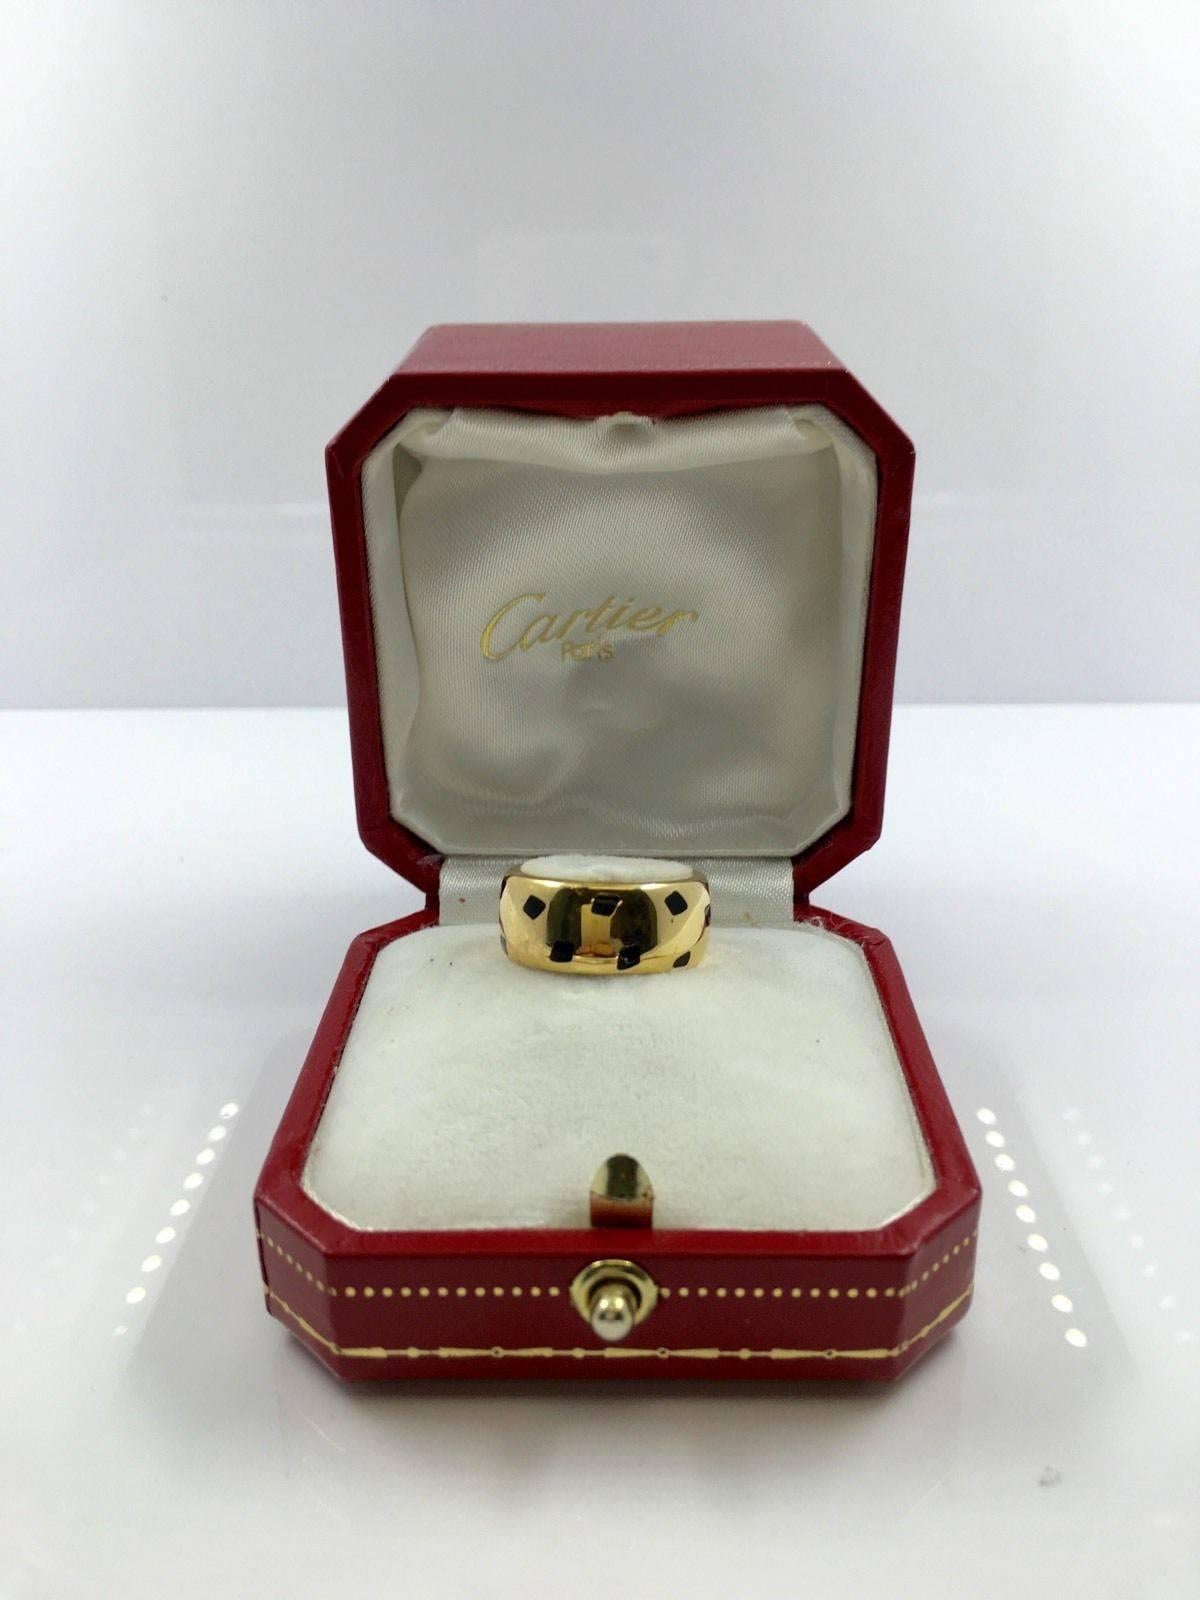 PRODUCT DETAILS 

Metal Type: 18K Yellow Gold
Hallmark: 750 cartier
Signature: Cartier
Metal Finish: High Polish
Total Item Weight (g):13.6 gram
Condition: Excellent. 
MeasurementsOrnament Width 8.70mm